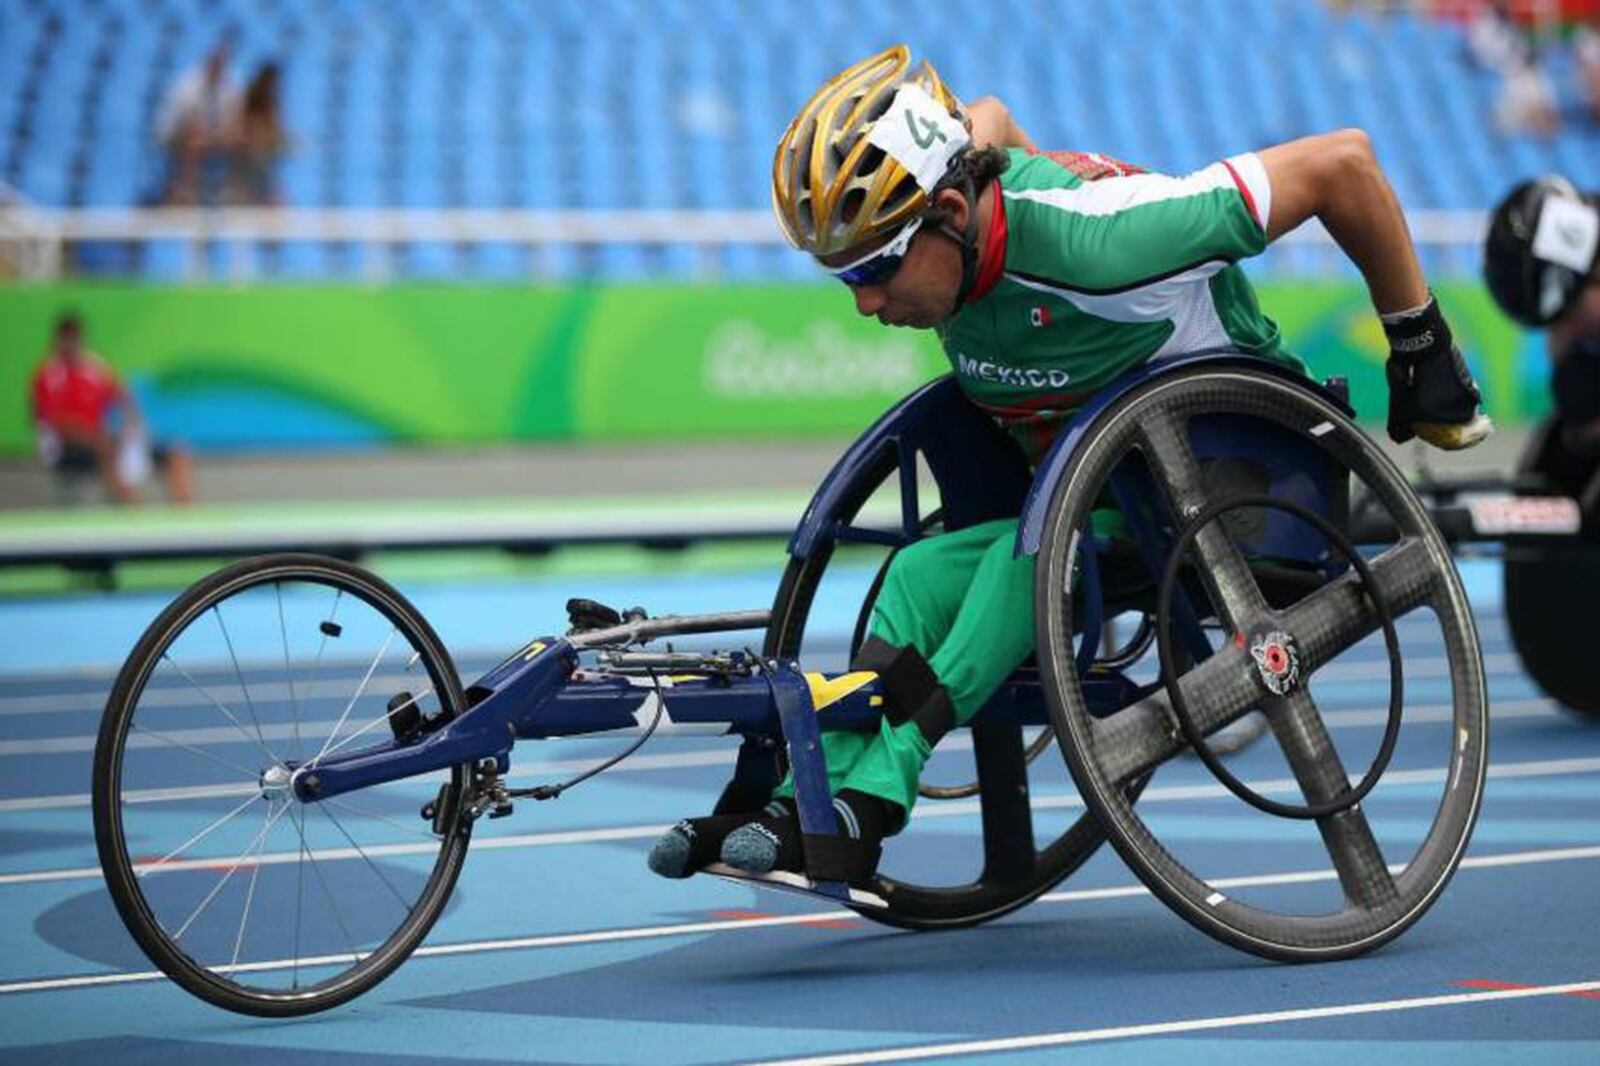 Juegos Paralímpicos de Tokio: Calendario de deportistas mexicanos a seguir